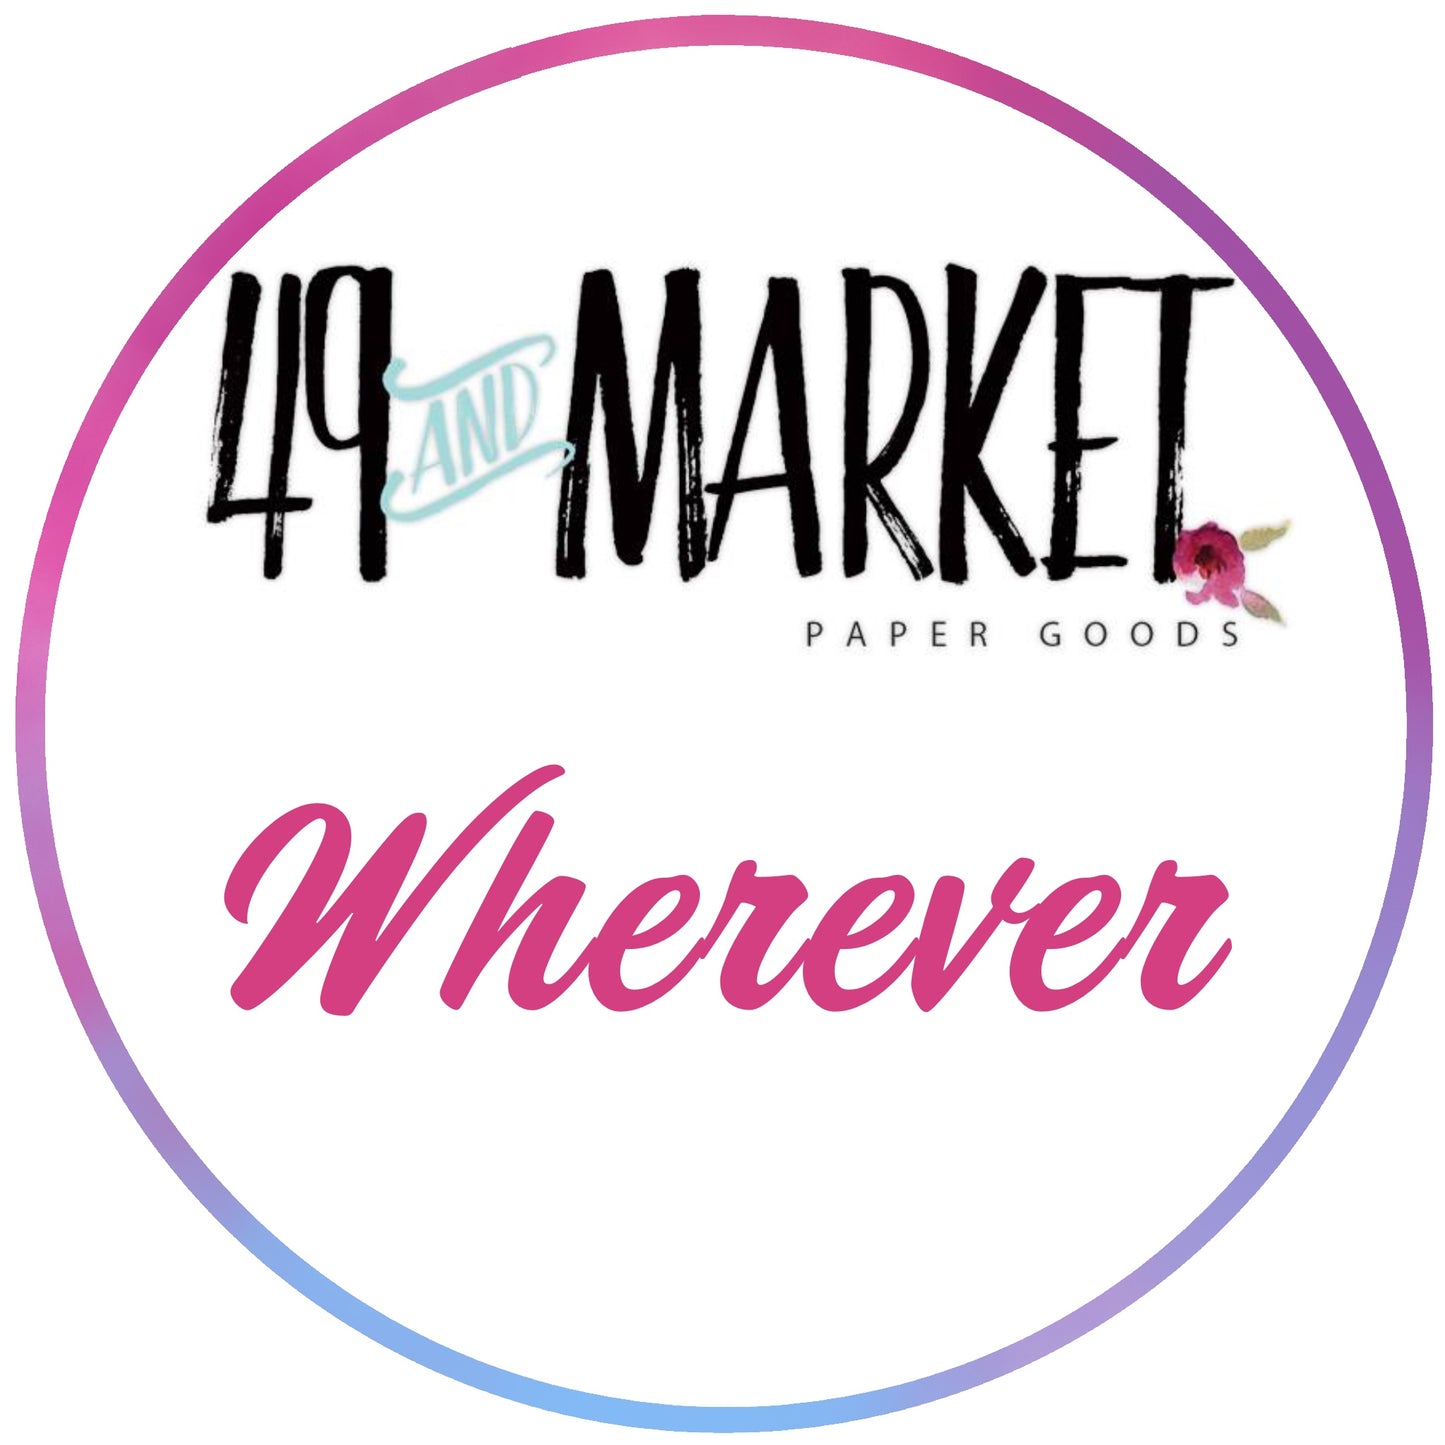 49 & Market Wherever Fabric Tape Assortment – Kreative Kreations